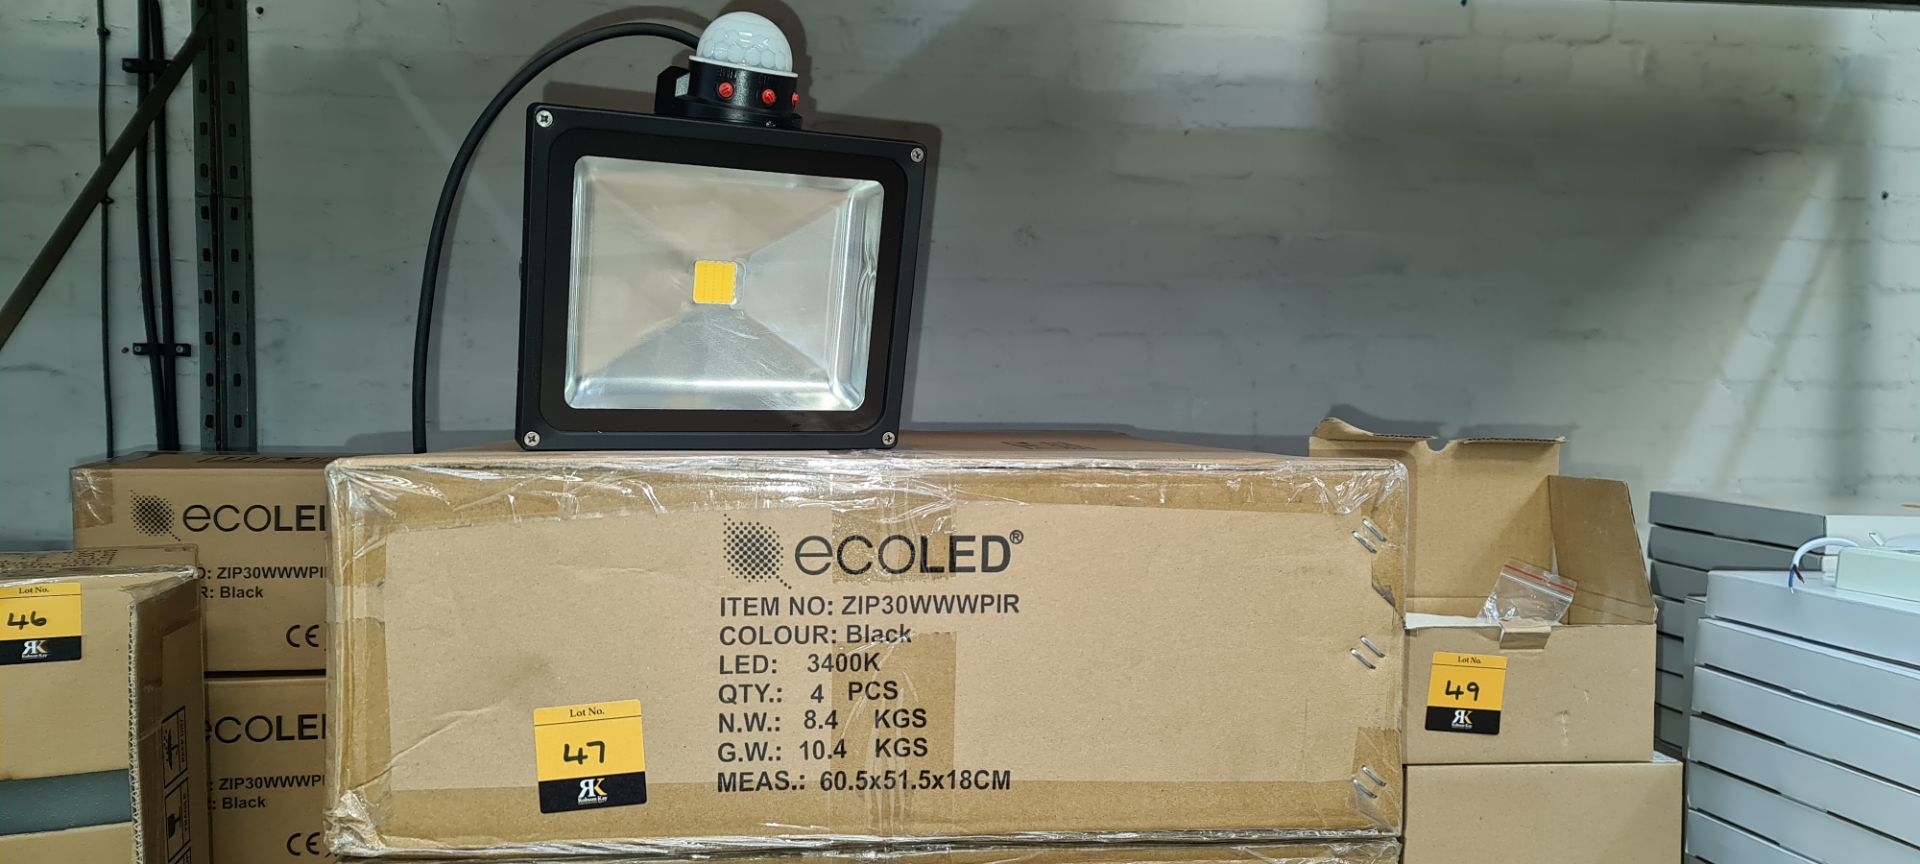 4 off EcoLED floodlights with built-in sensors. Item ZIP30WWWPIR, 36W LED PIR floodlights - Image 6 of 10